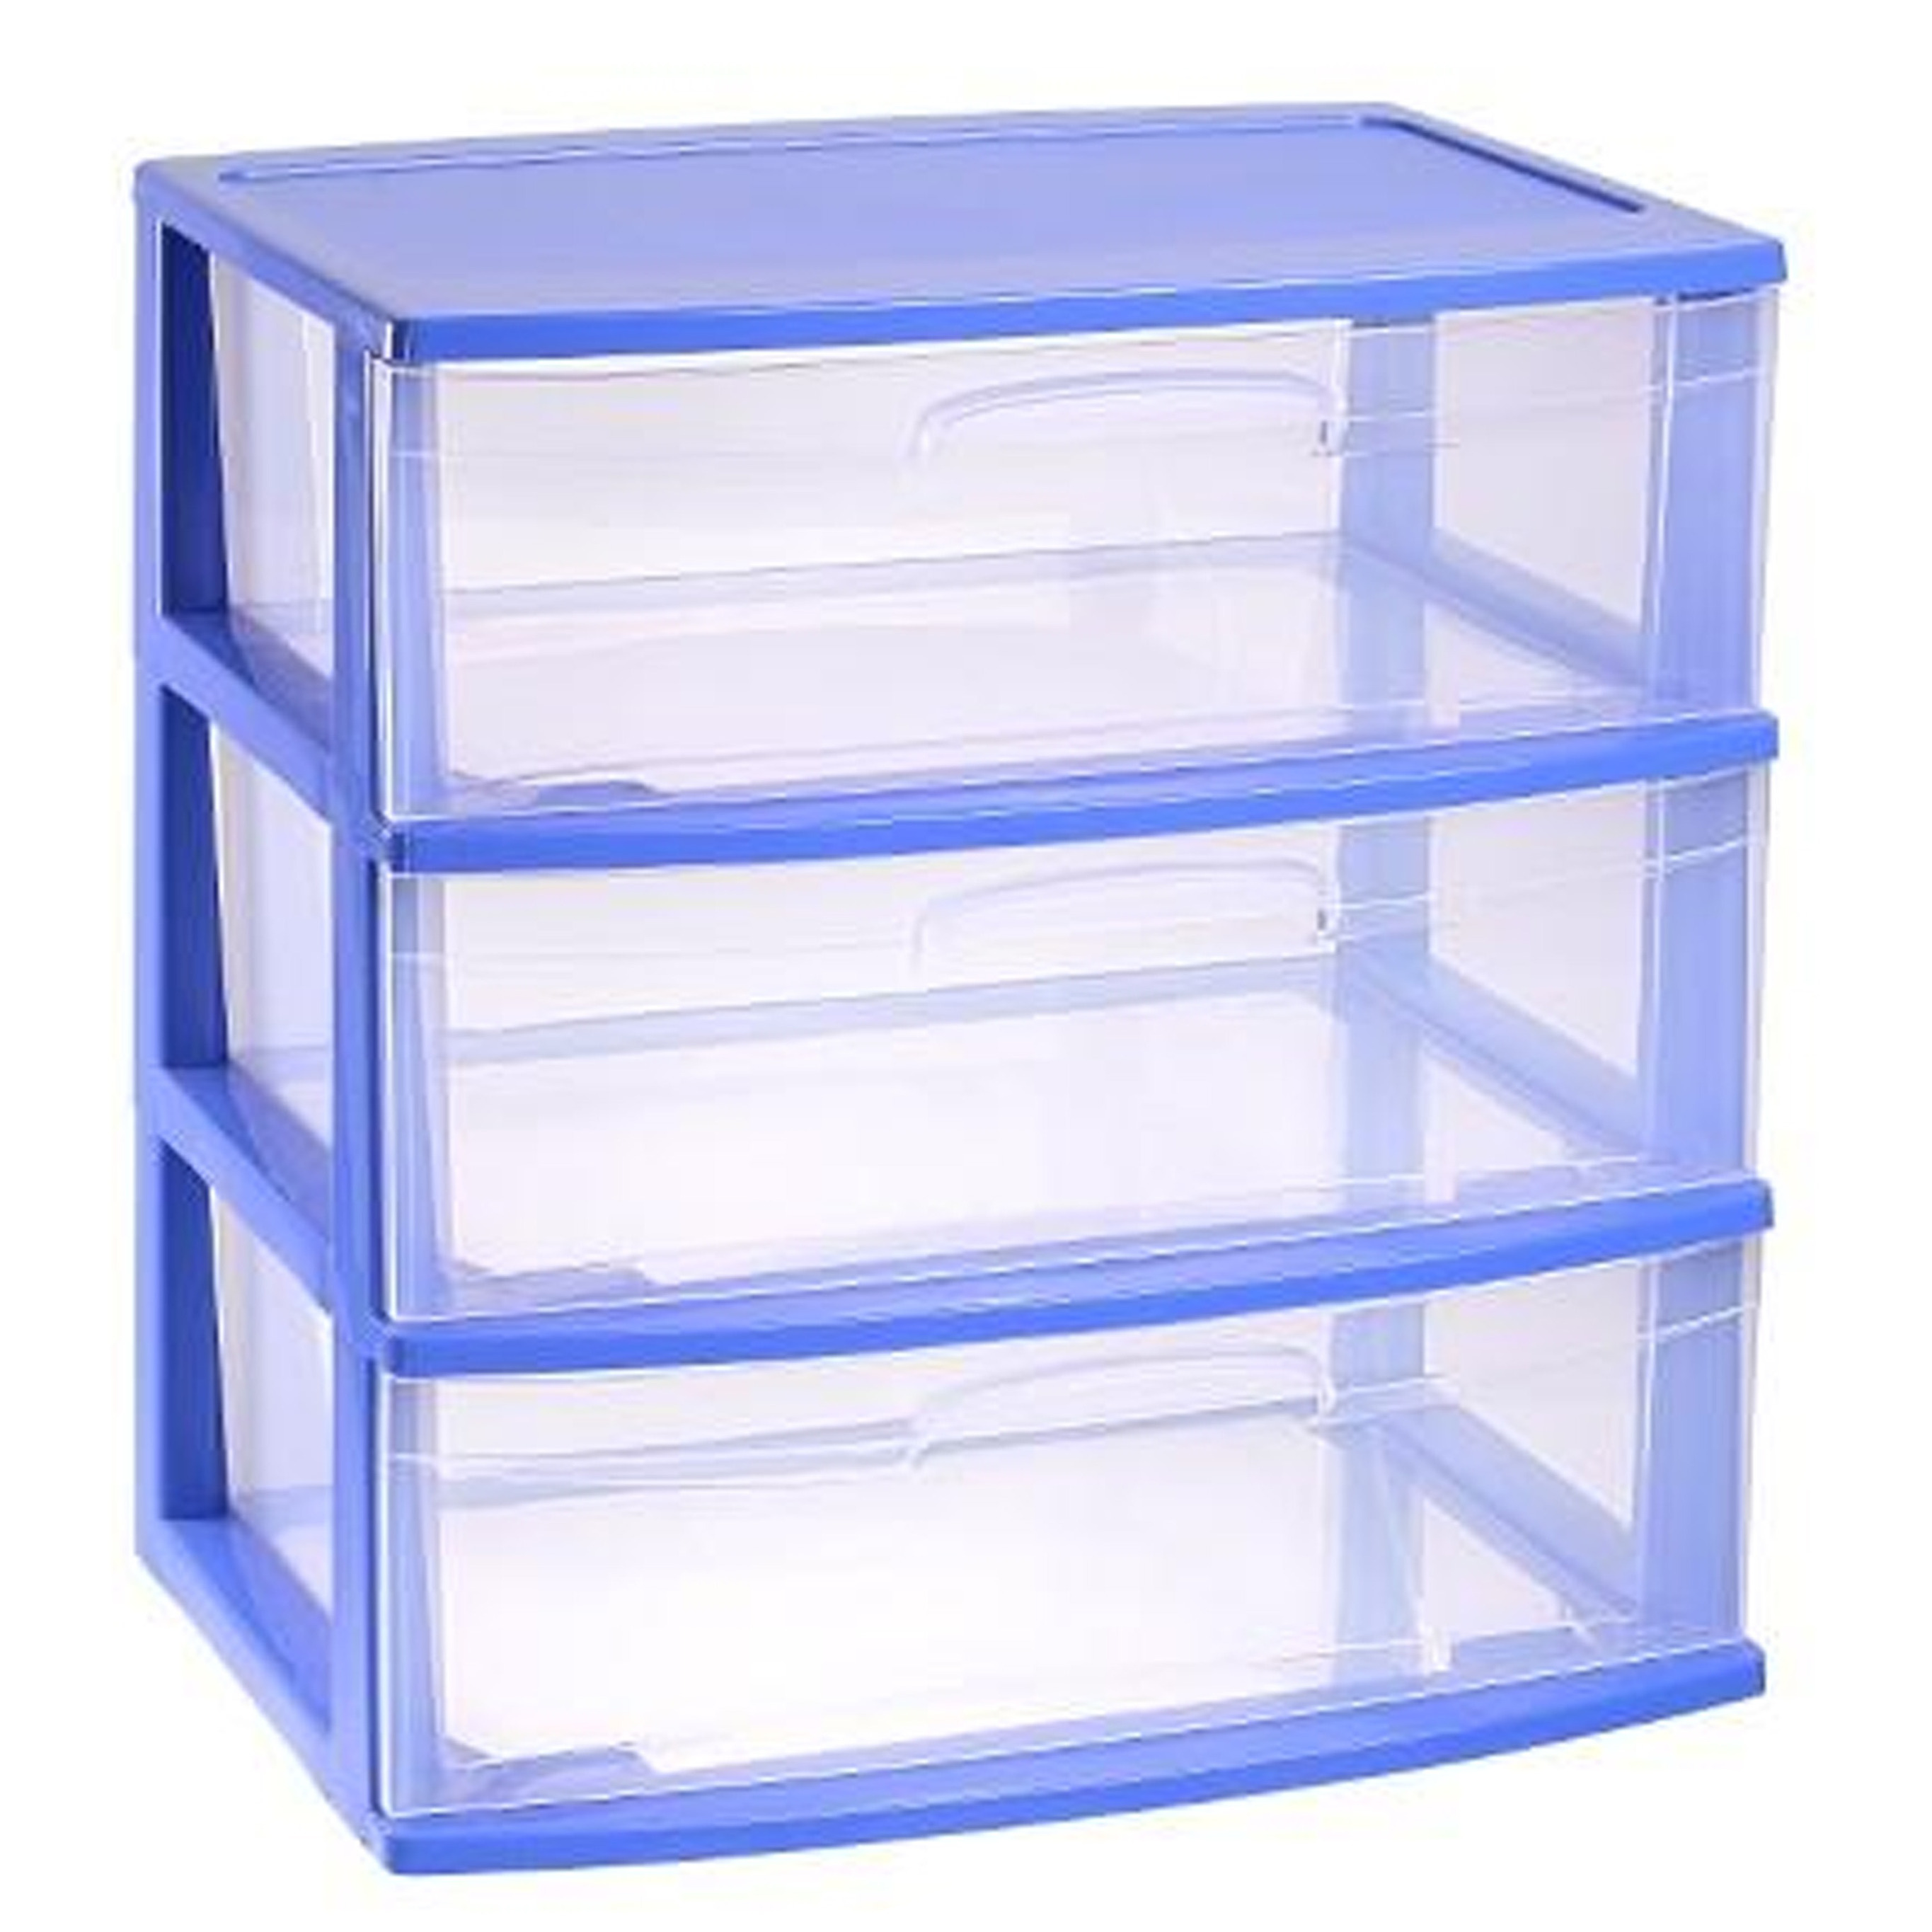 Ladeblokje-spullen storage organizer 3x lades blauw-transparant L56 x B40 x H61 cm plastic